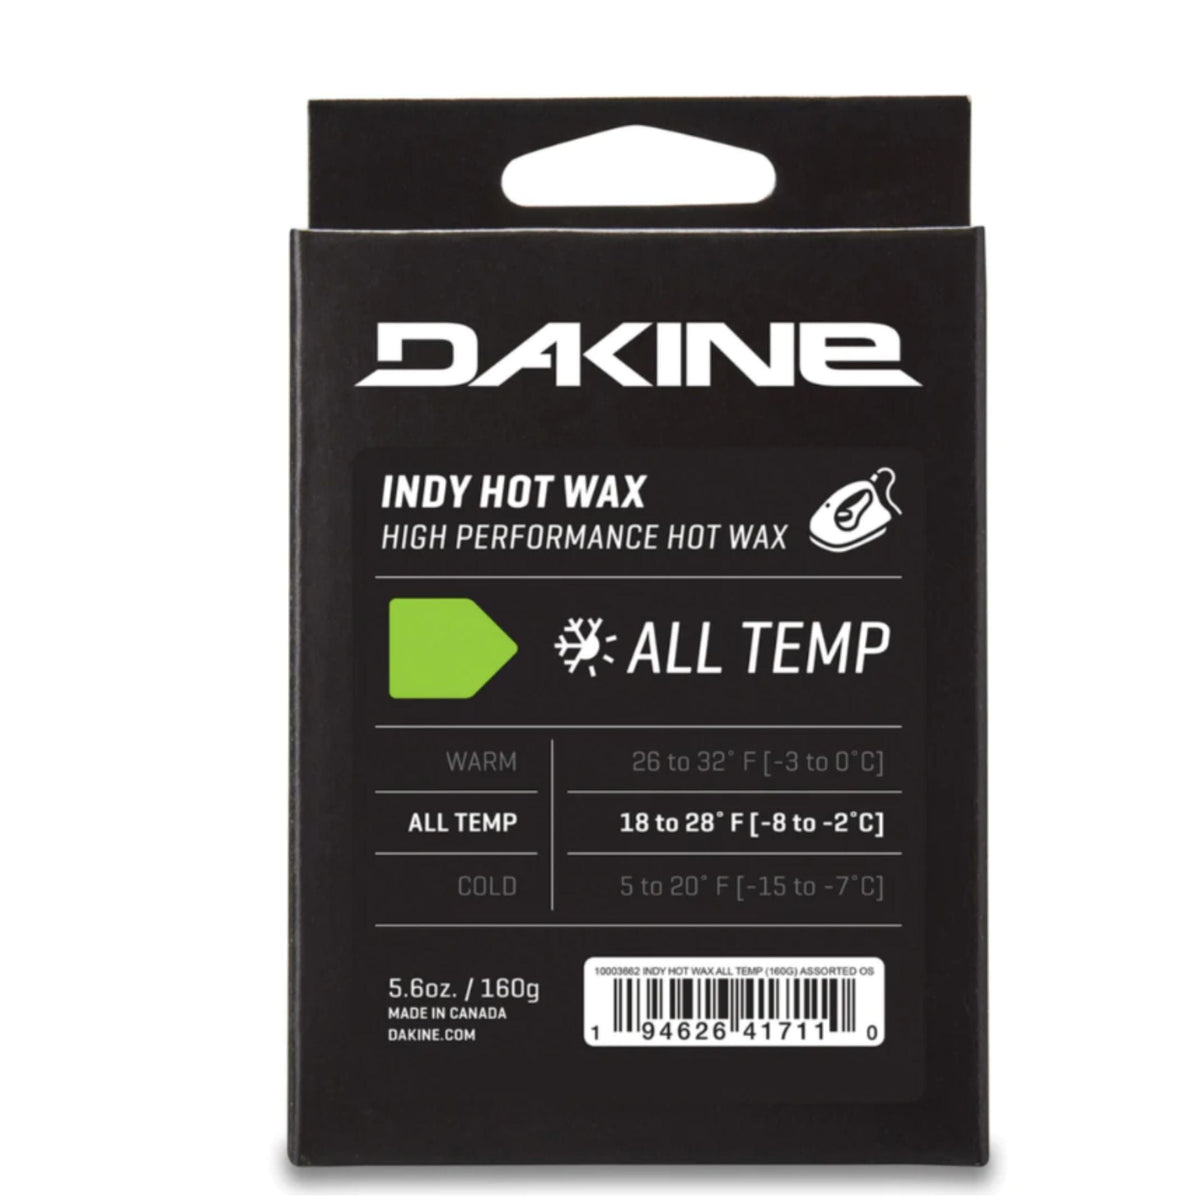 Dakine Indy Hot Wax All Temp 160g